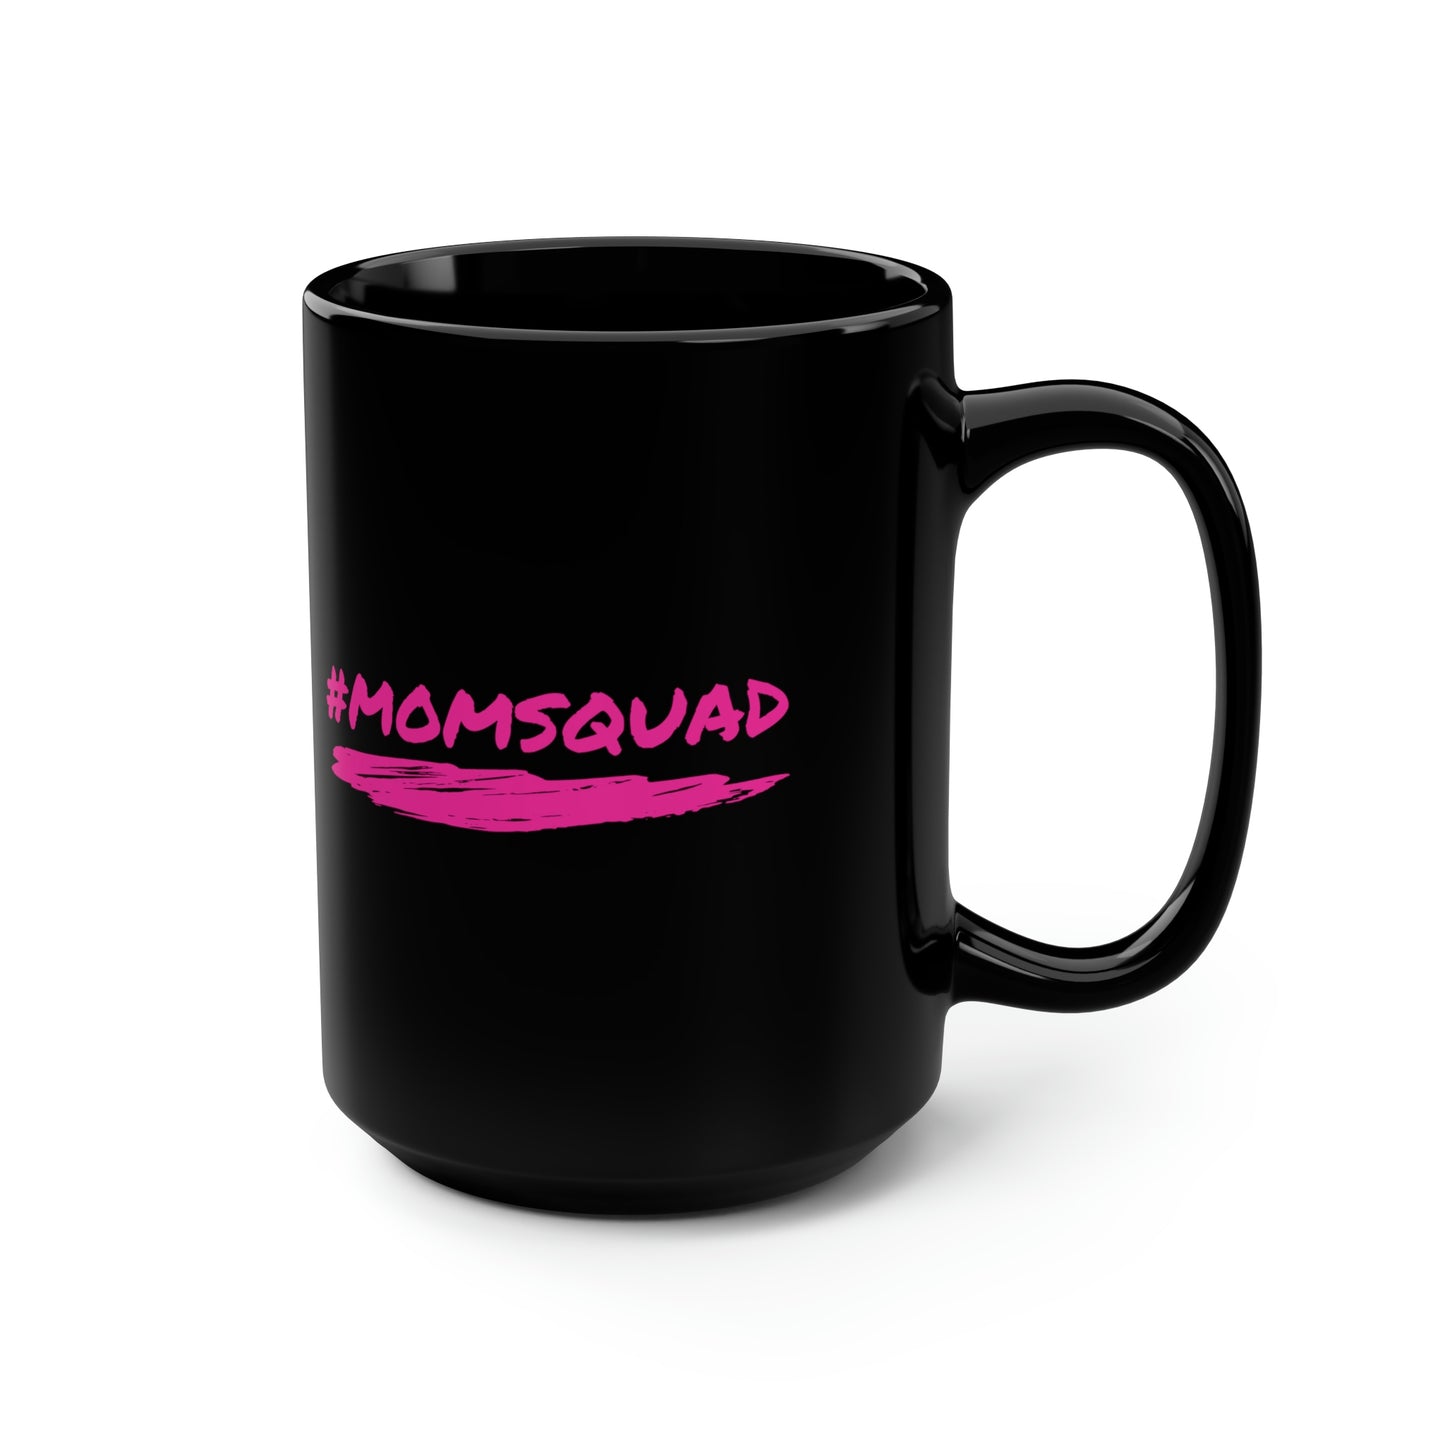 #Momsquad Black Mug, 15oz